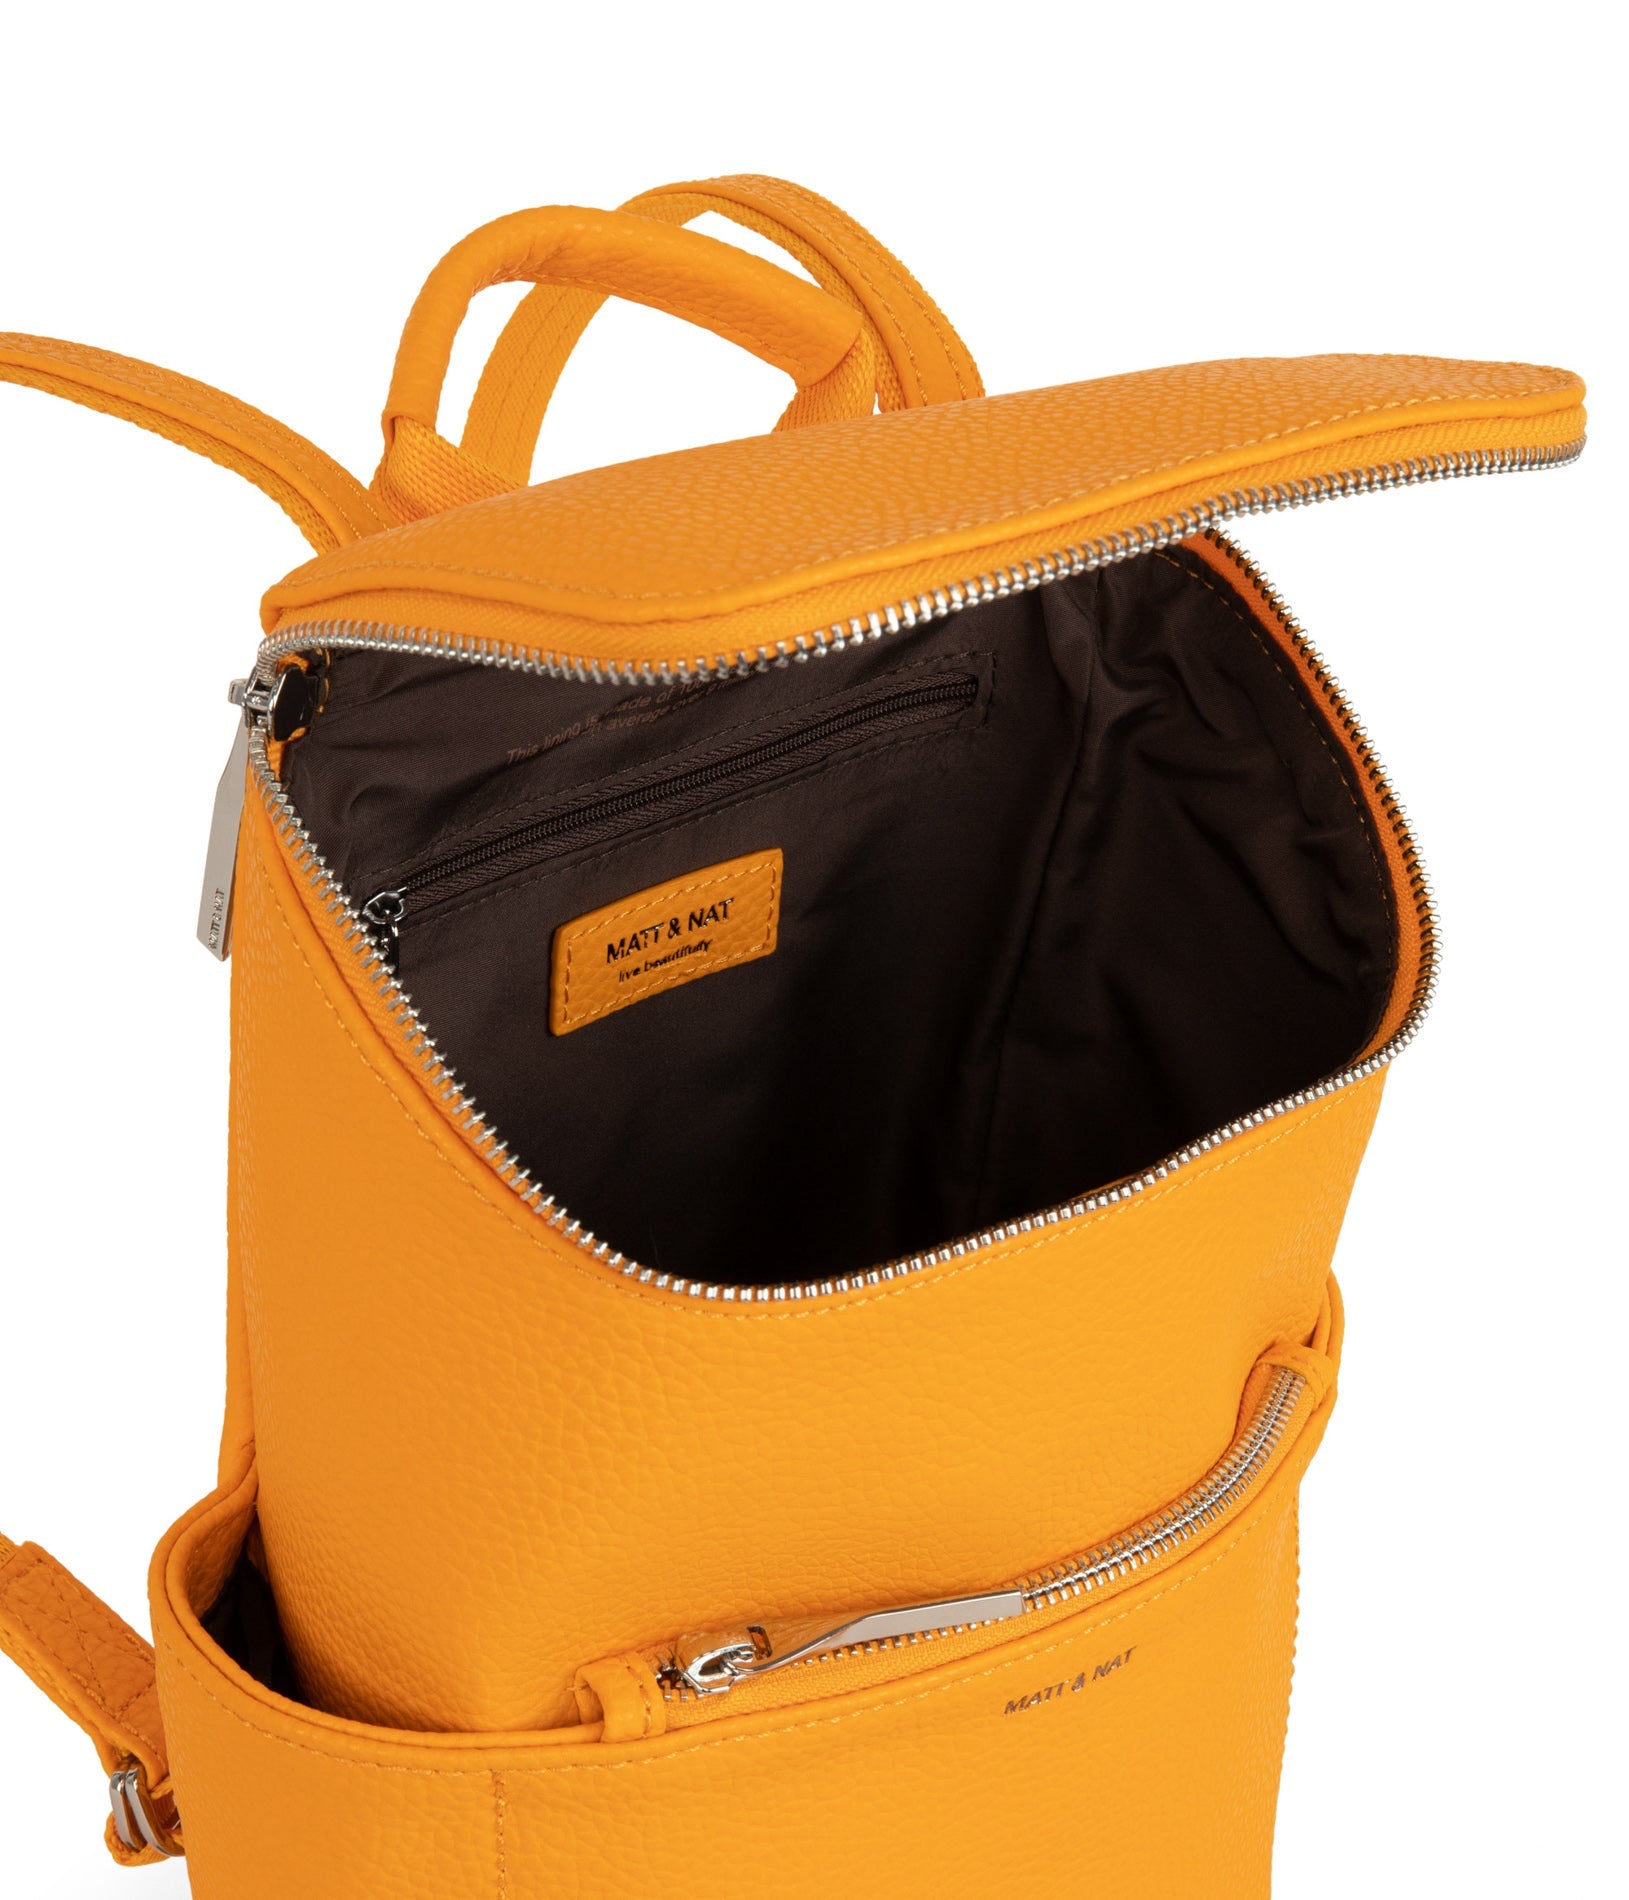 BRAVESM Small Vegan Backpack - Purity | Color: Orange - variant::arancia